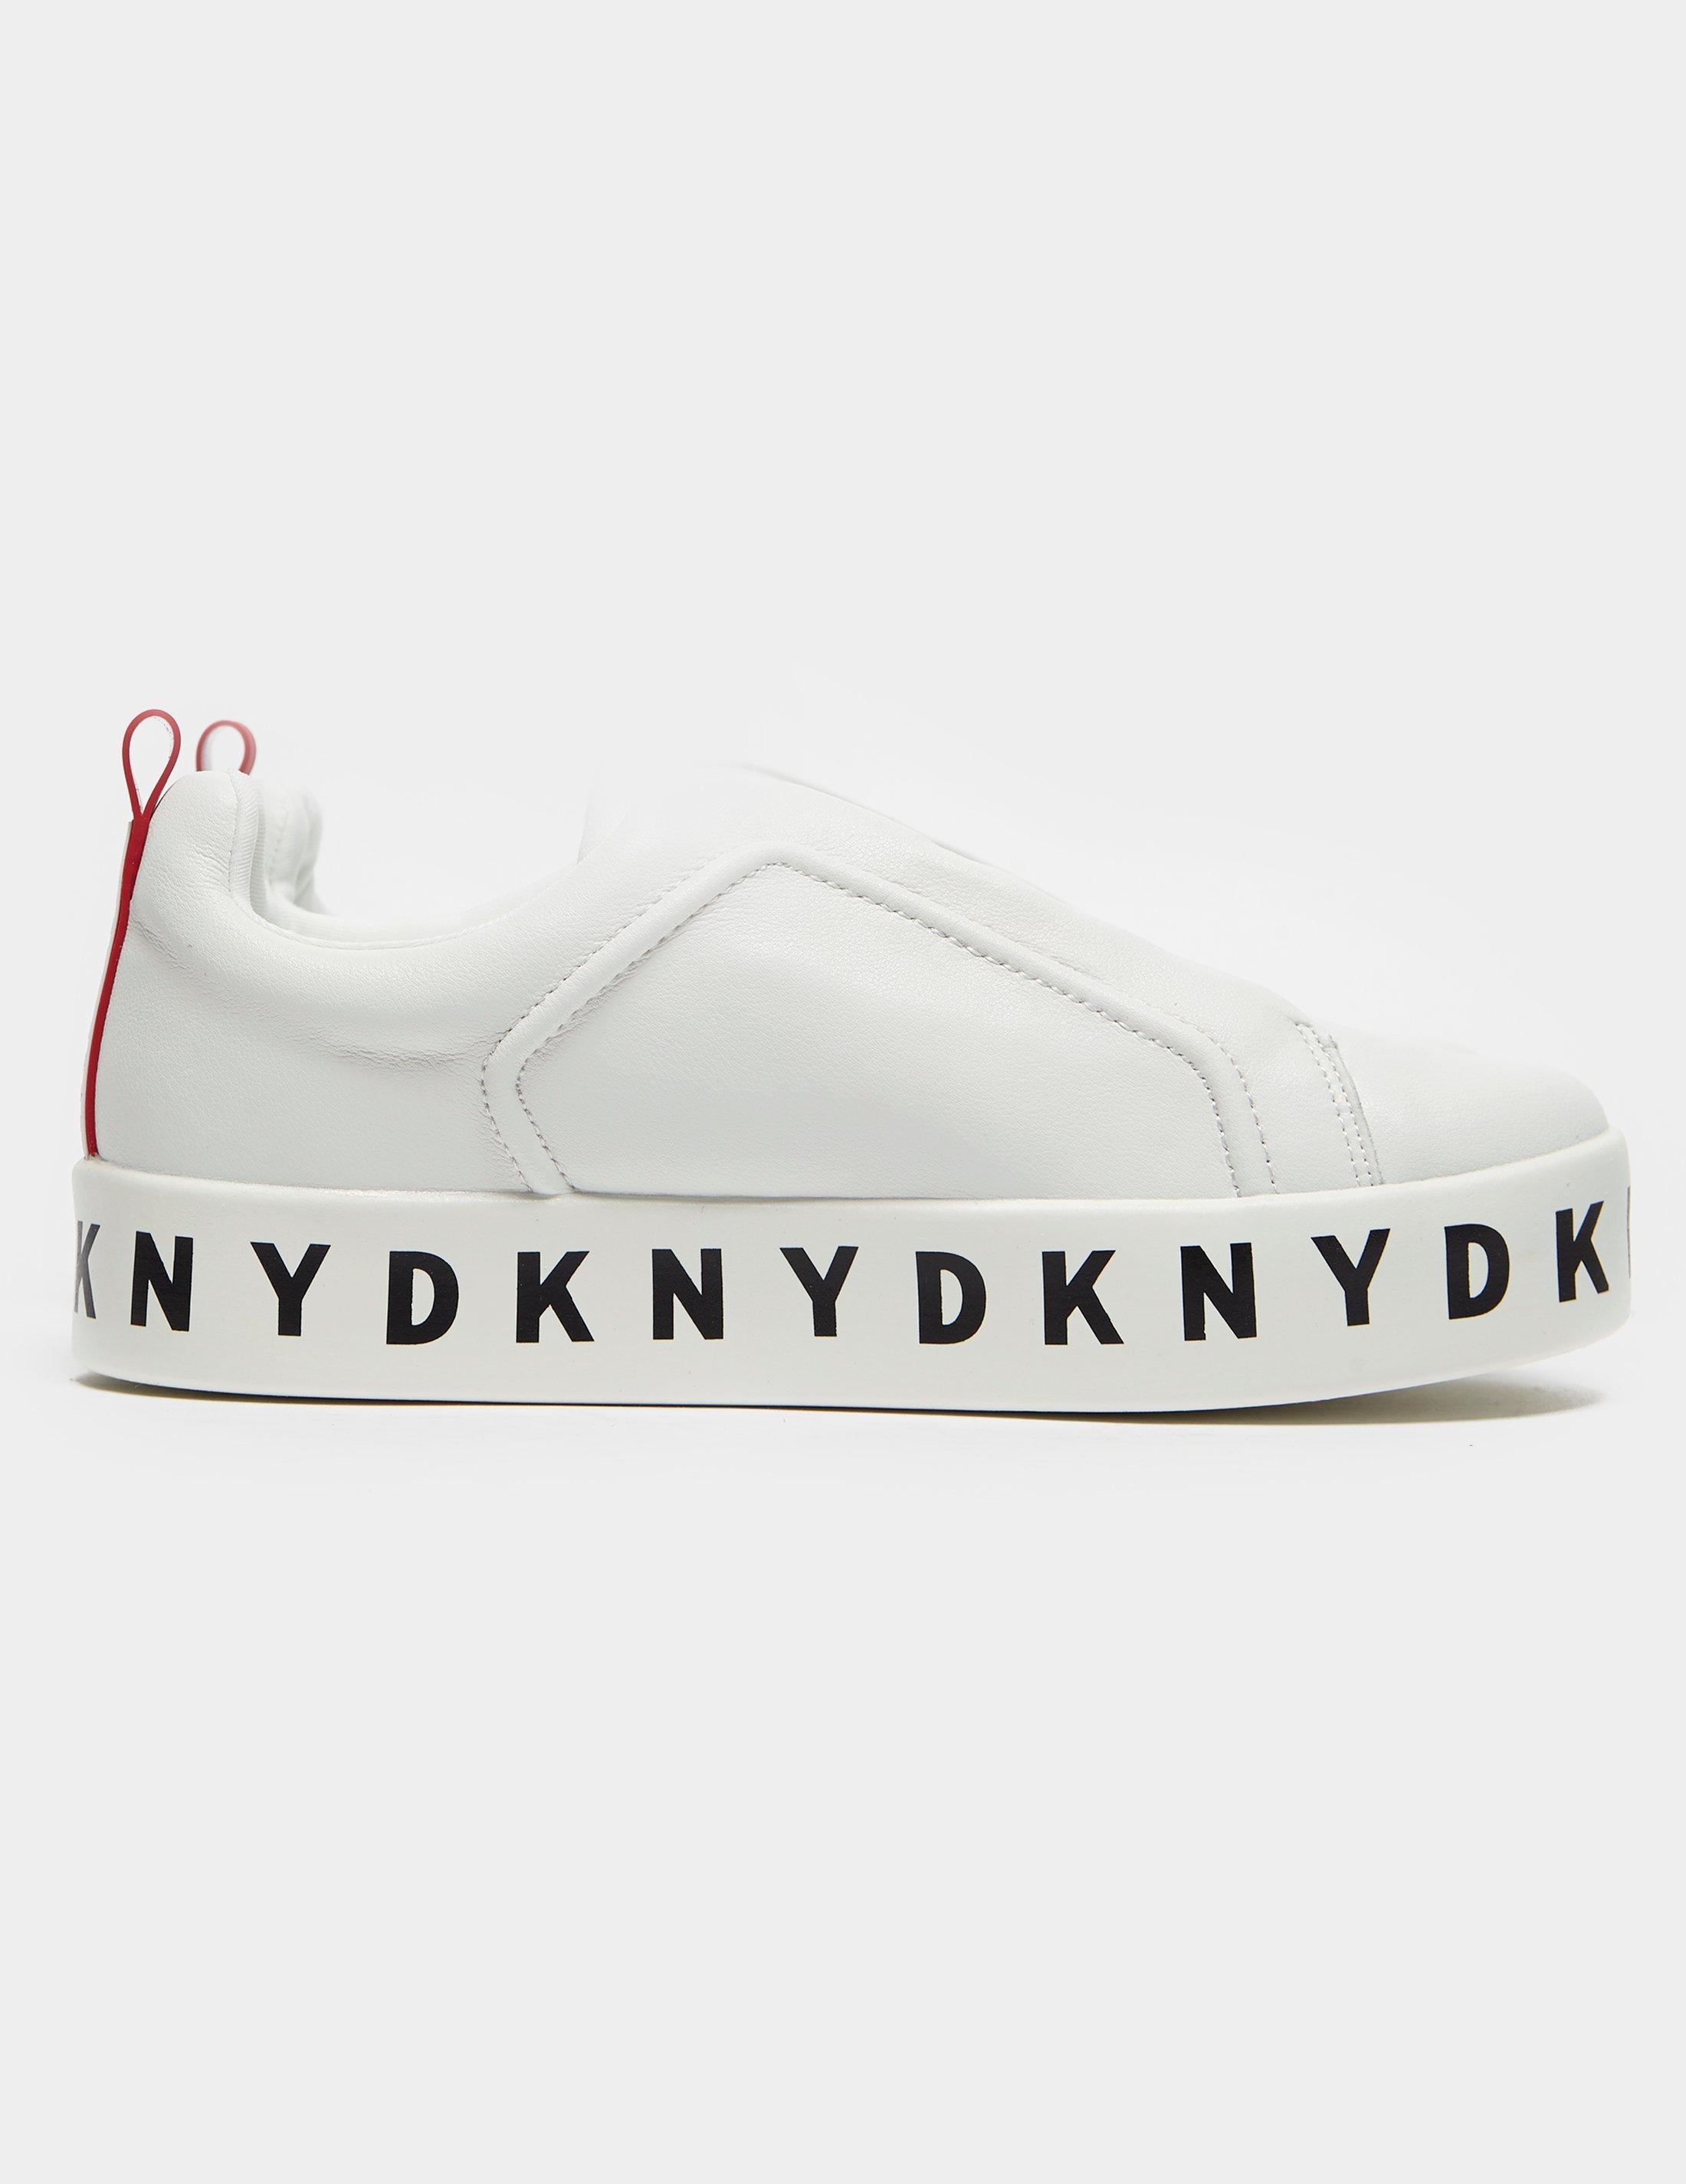 dkny platform sneaker